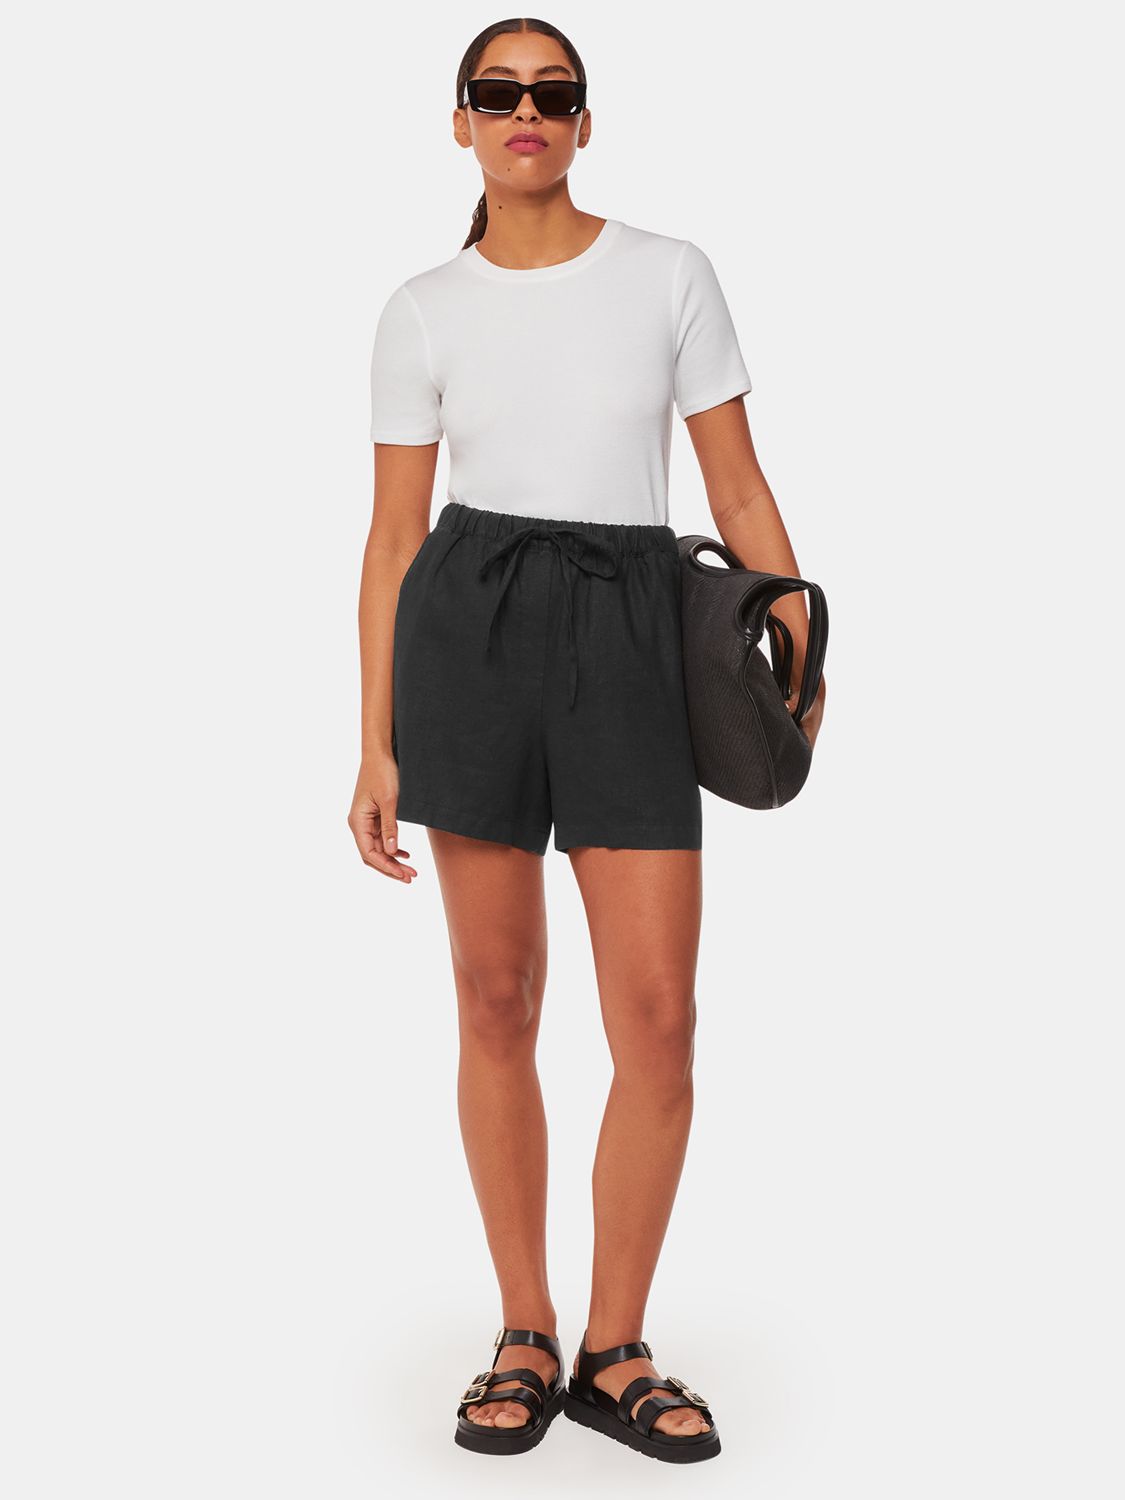 Whistles Petite Elasticated Waist Linen Shorts, Black, 6